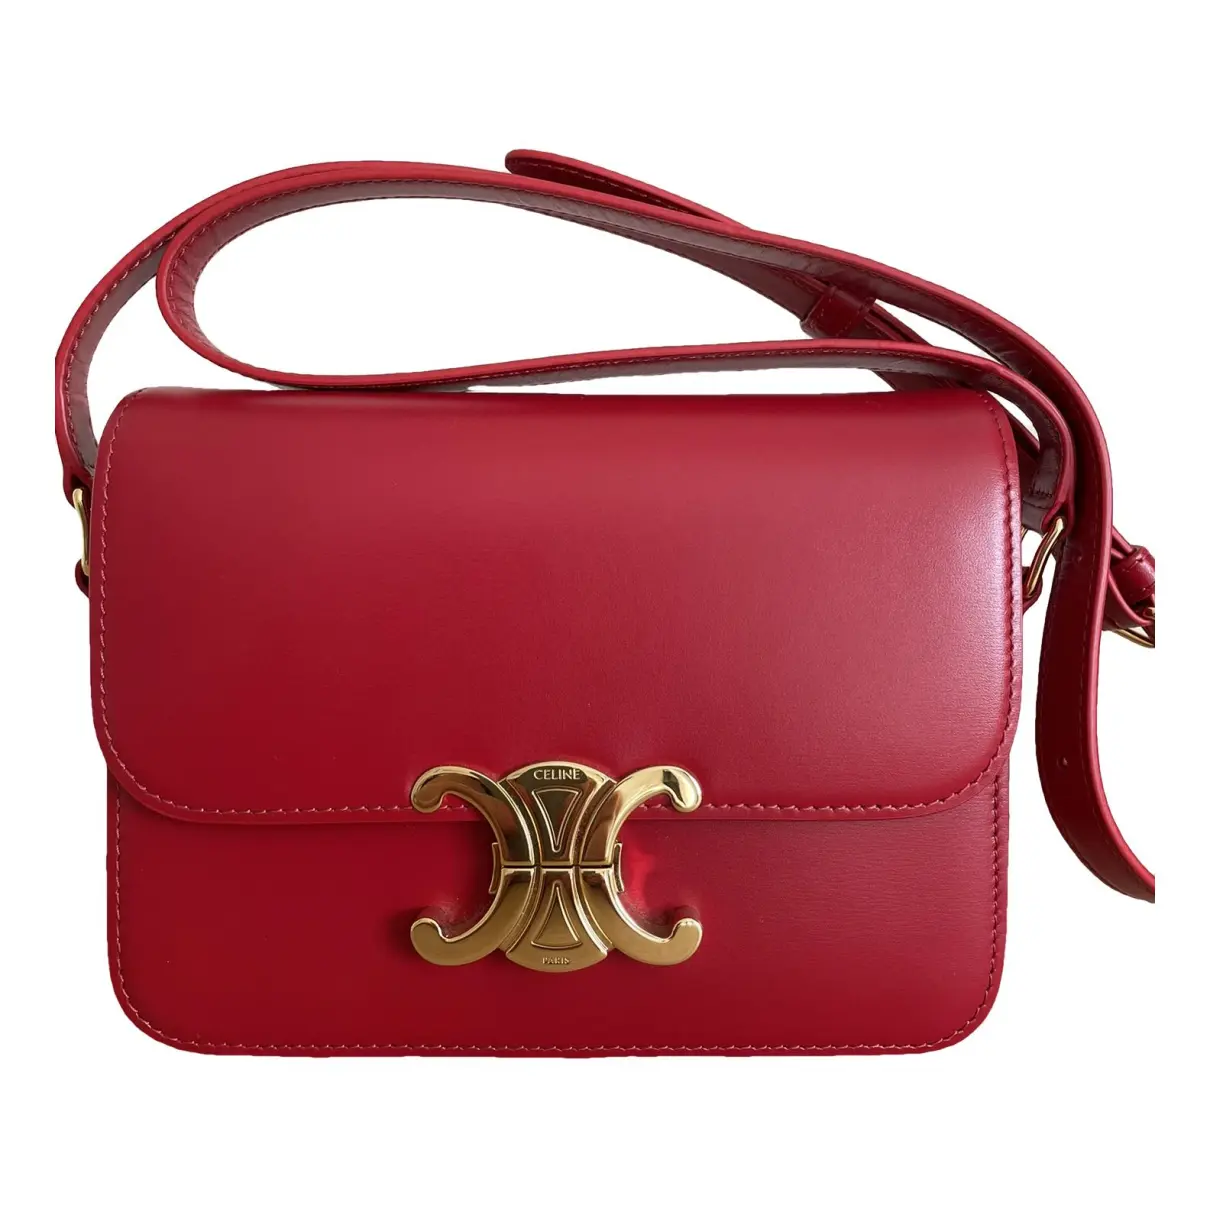 Triomphe leather handbag